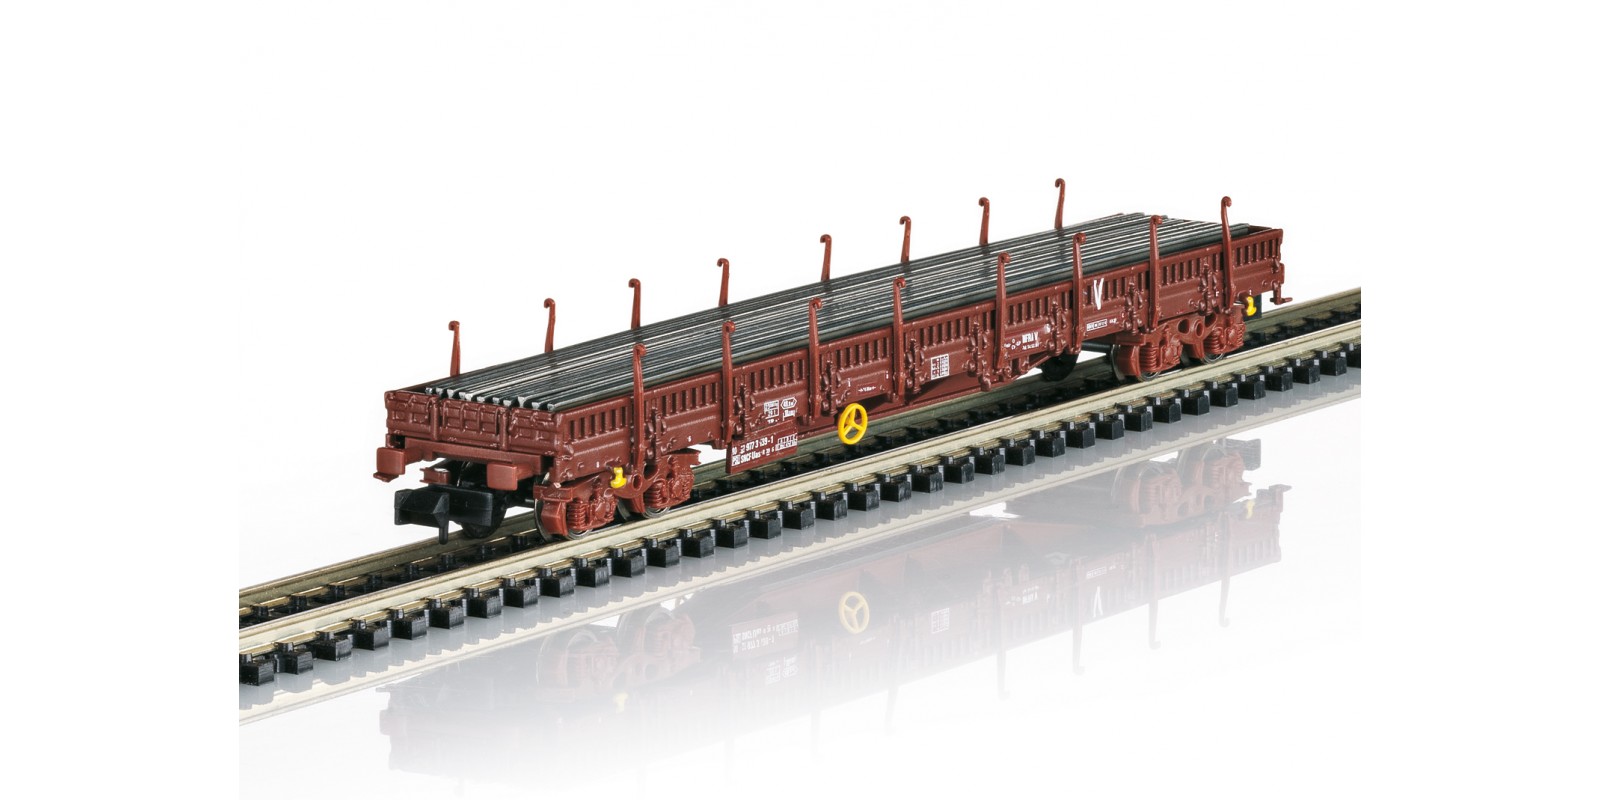 T18290 Construction Train Freight Car Set